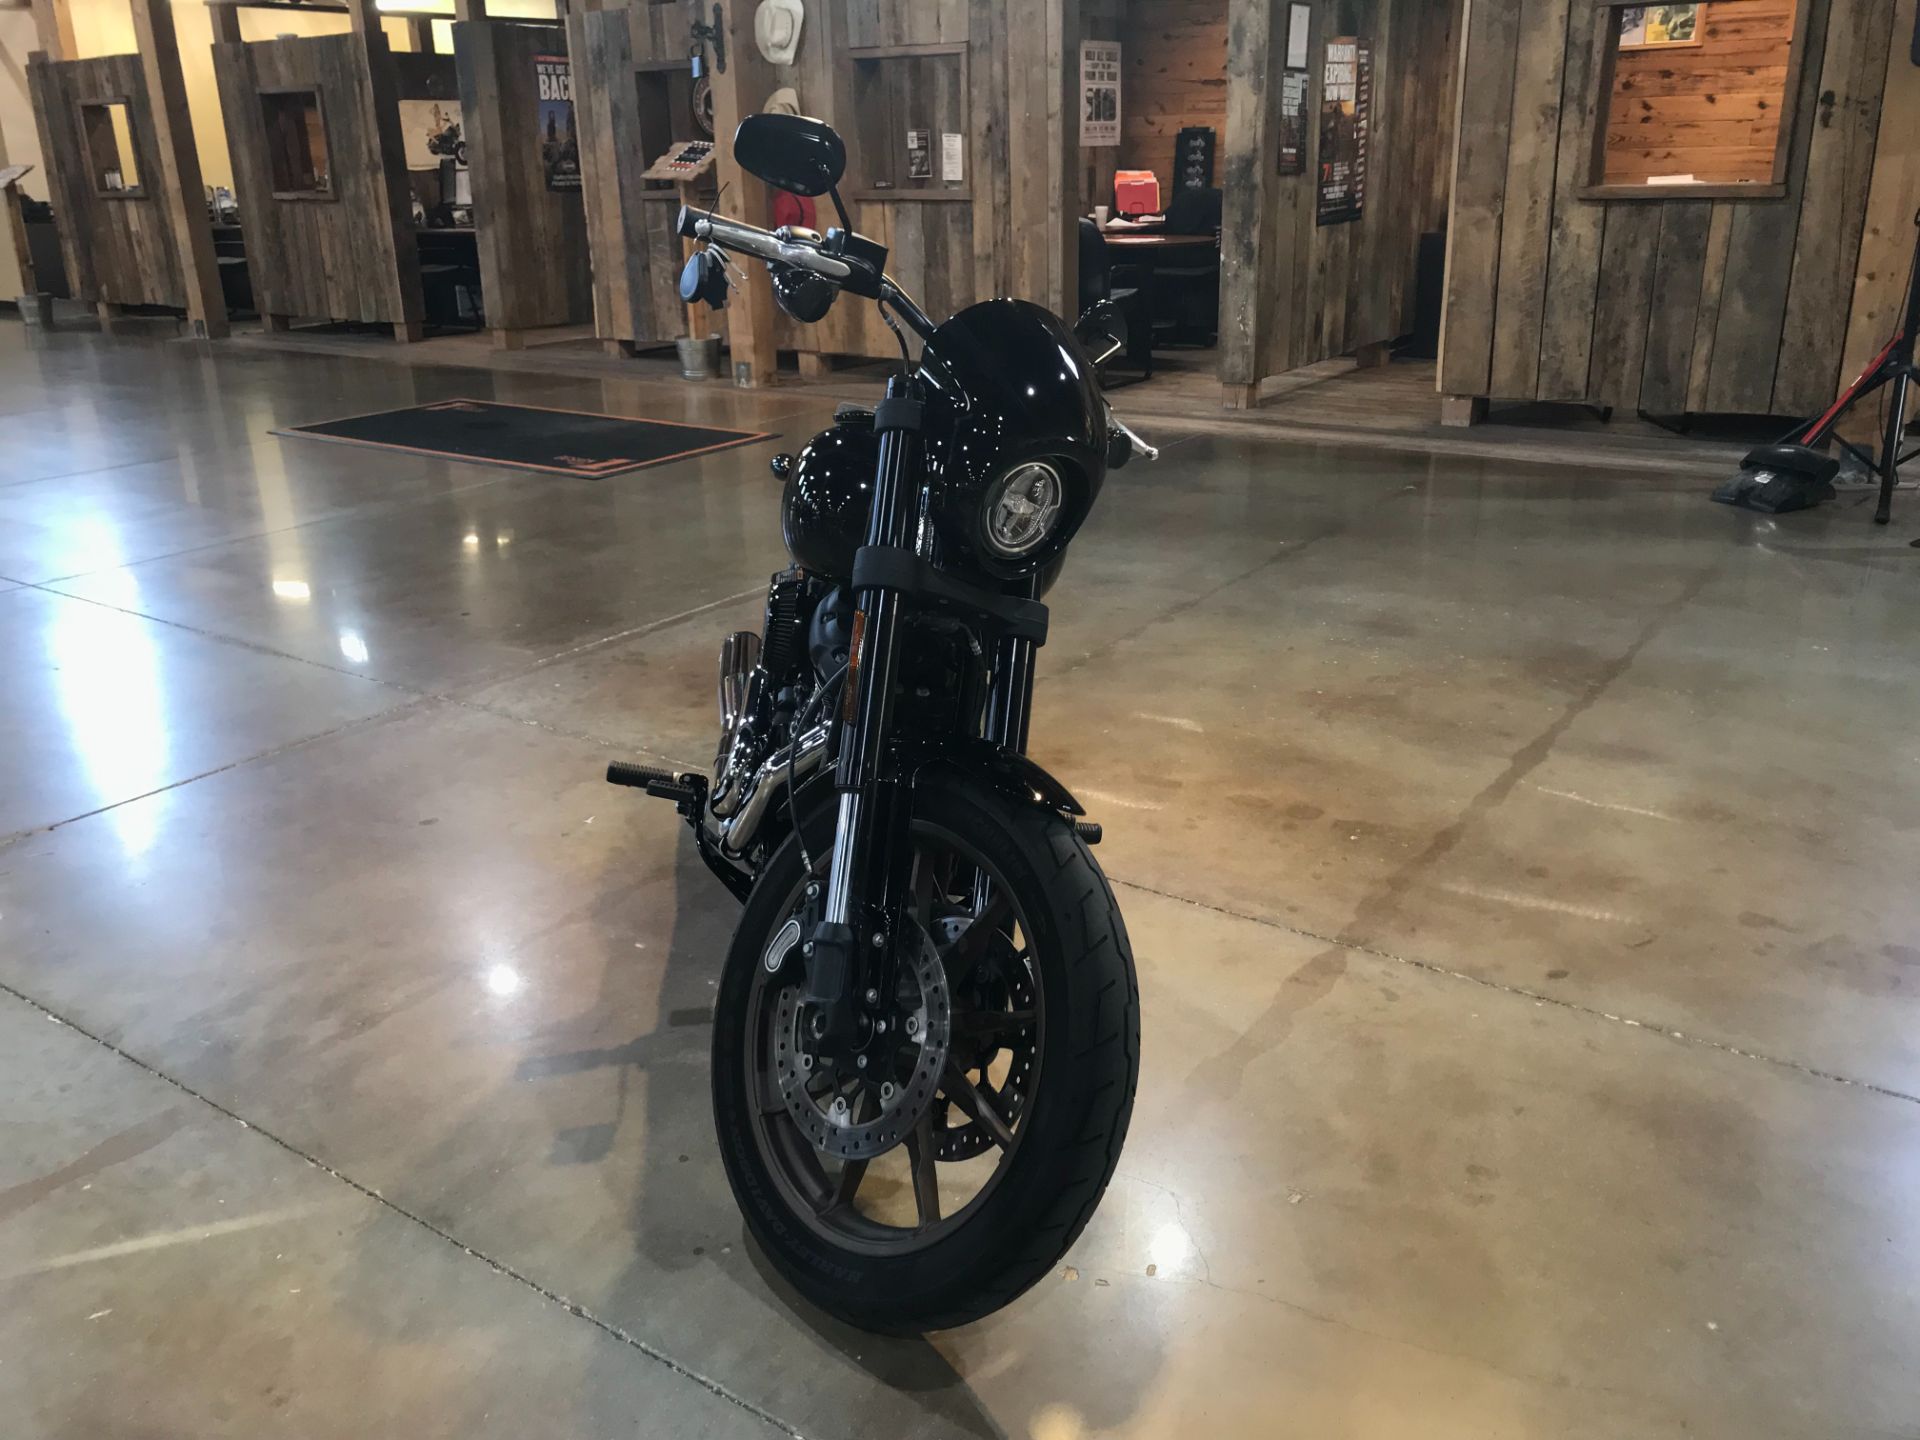 2021 Harley-Davidson Low Rider®S in Kingwood, Texas - Photo 2